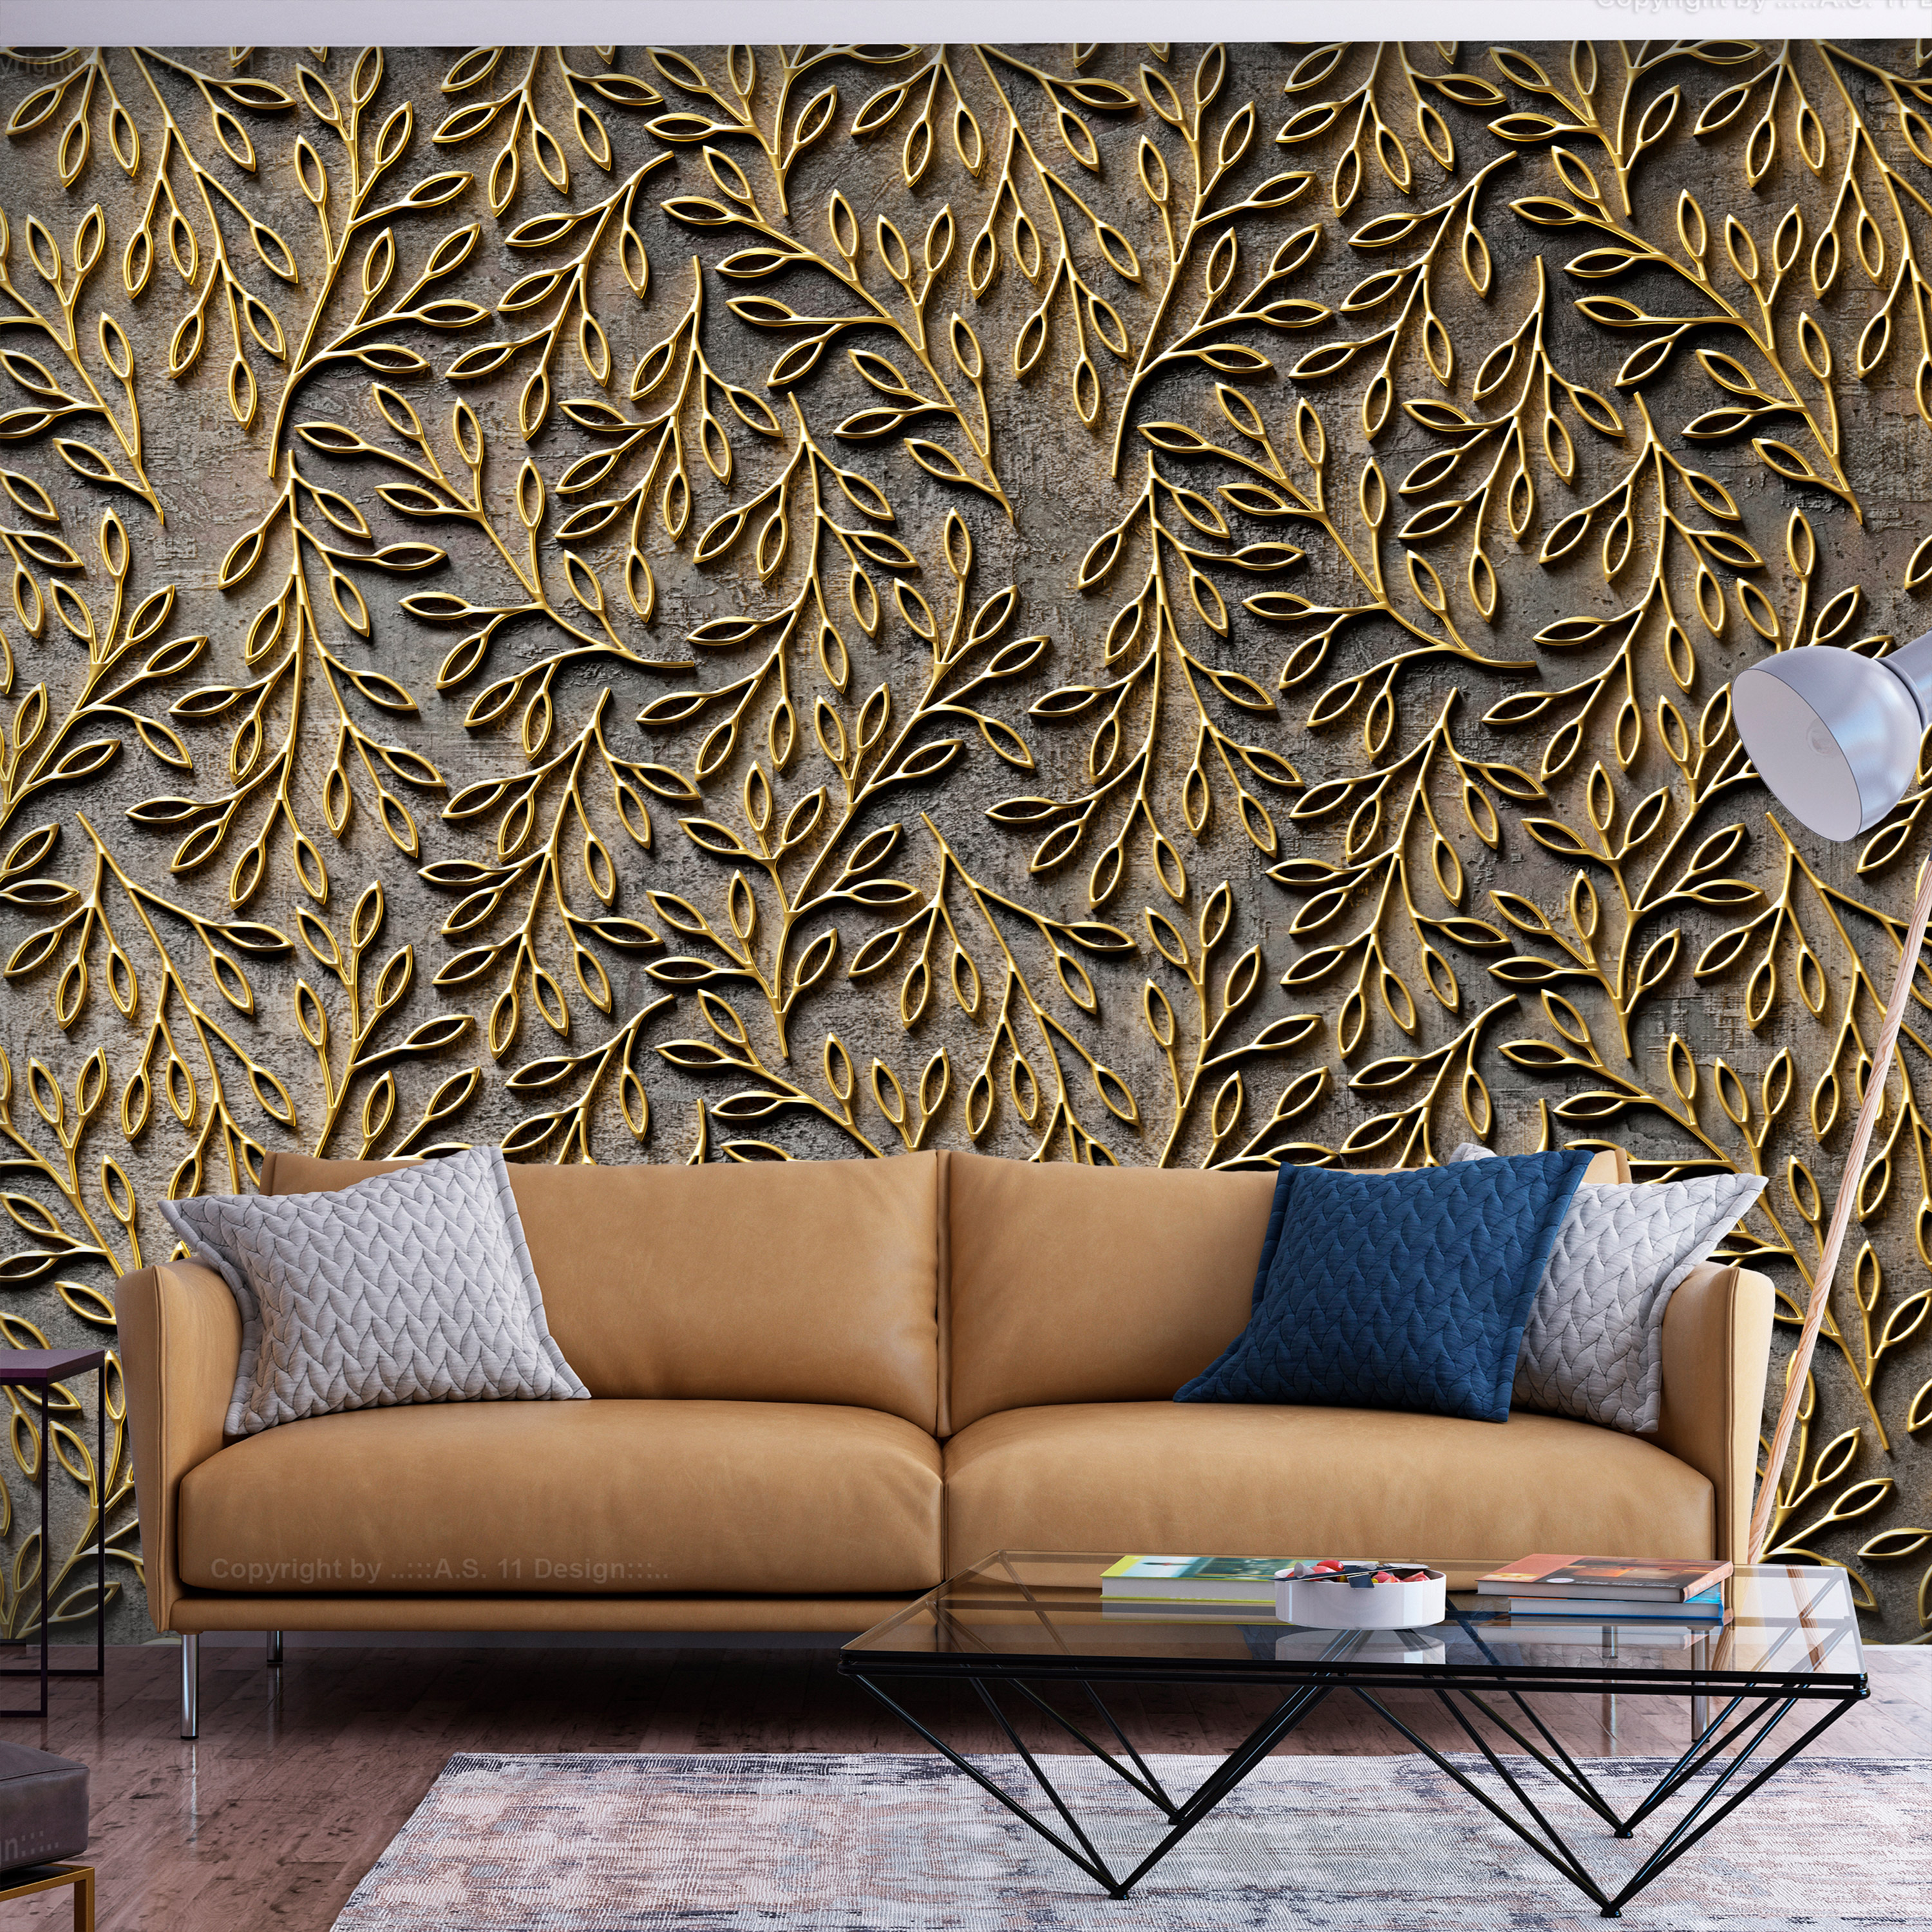 Self-adhesive Wallpaper - Golden Decorations - 441x315